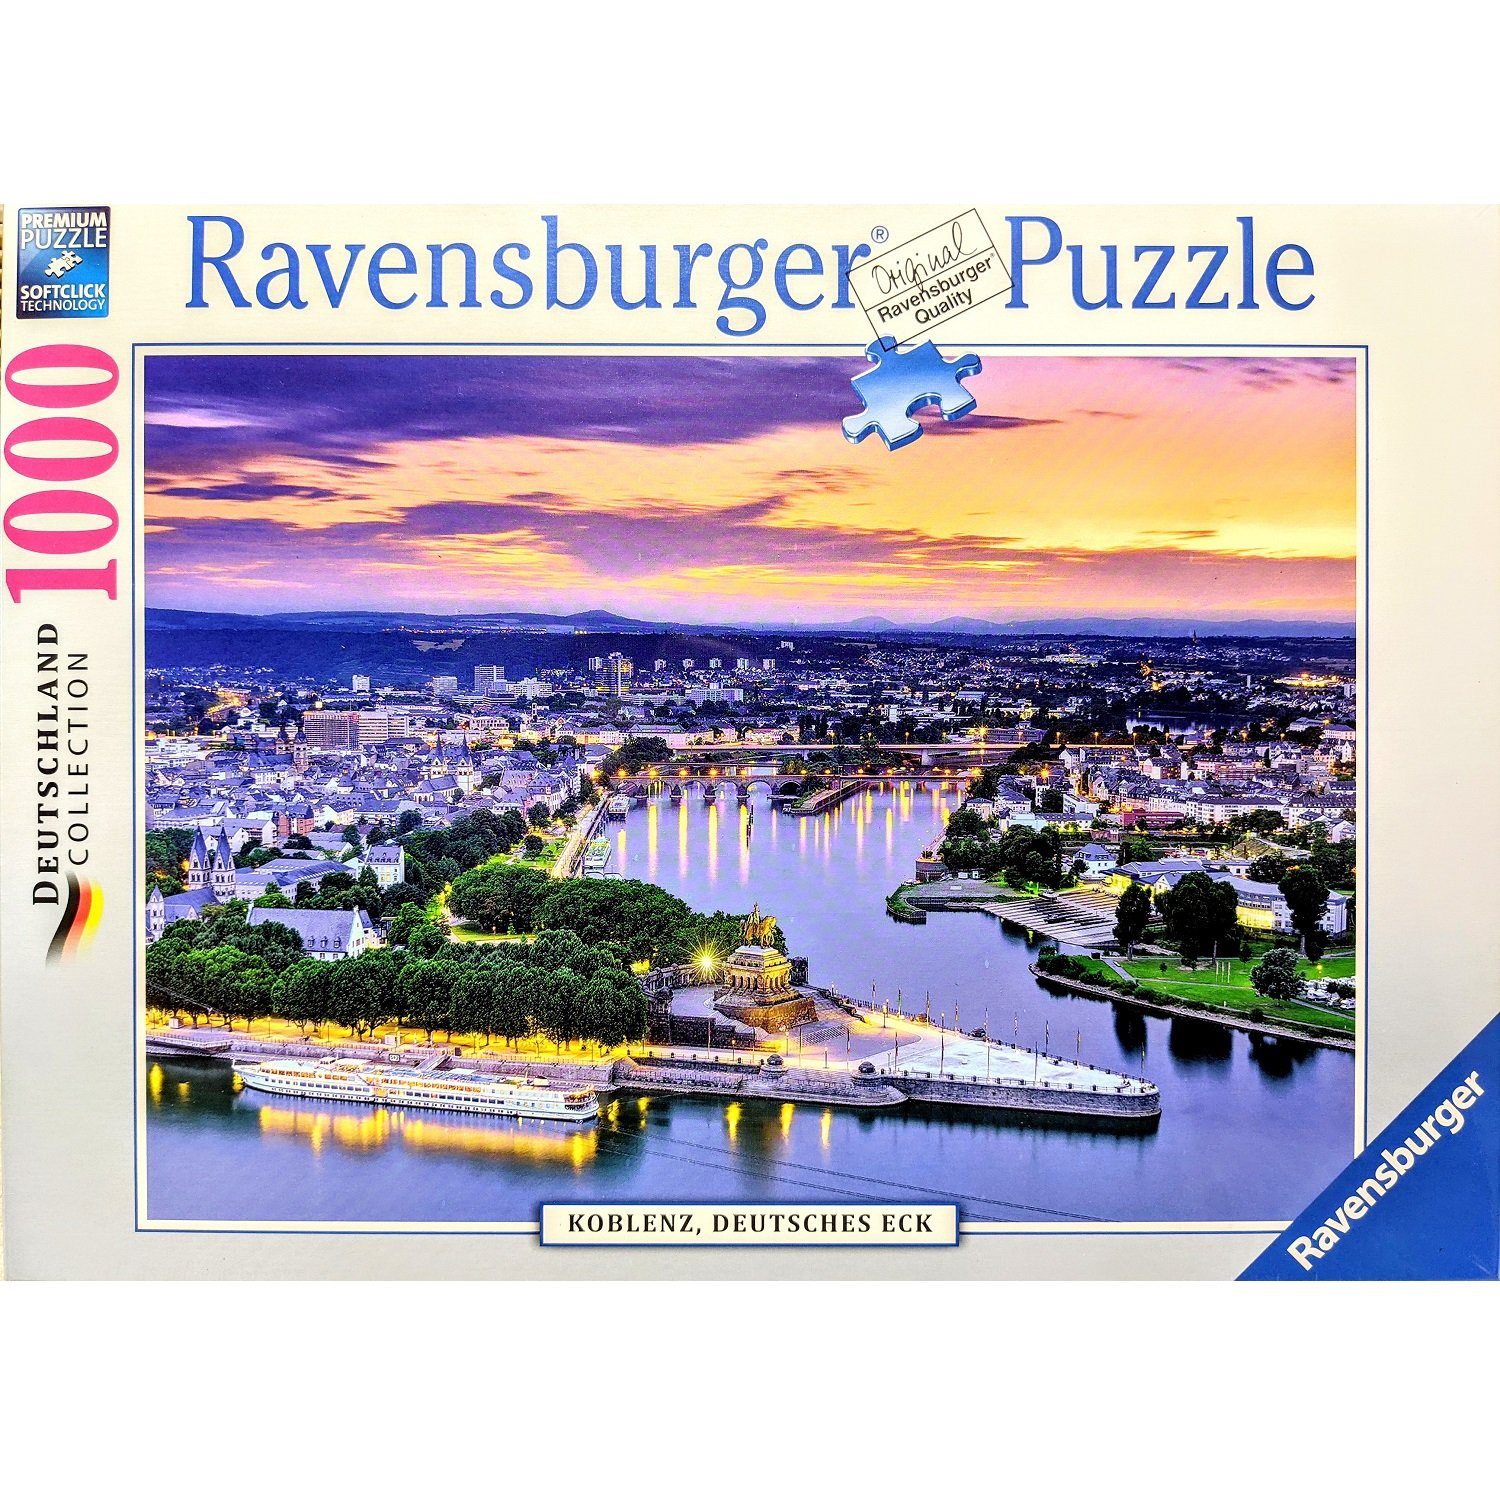 Ravensburger Puzzle Ravensburger - Koblenz: Deutsches Eck, 1000 Teile, 1000  Puzzleteile